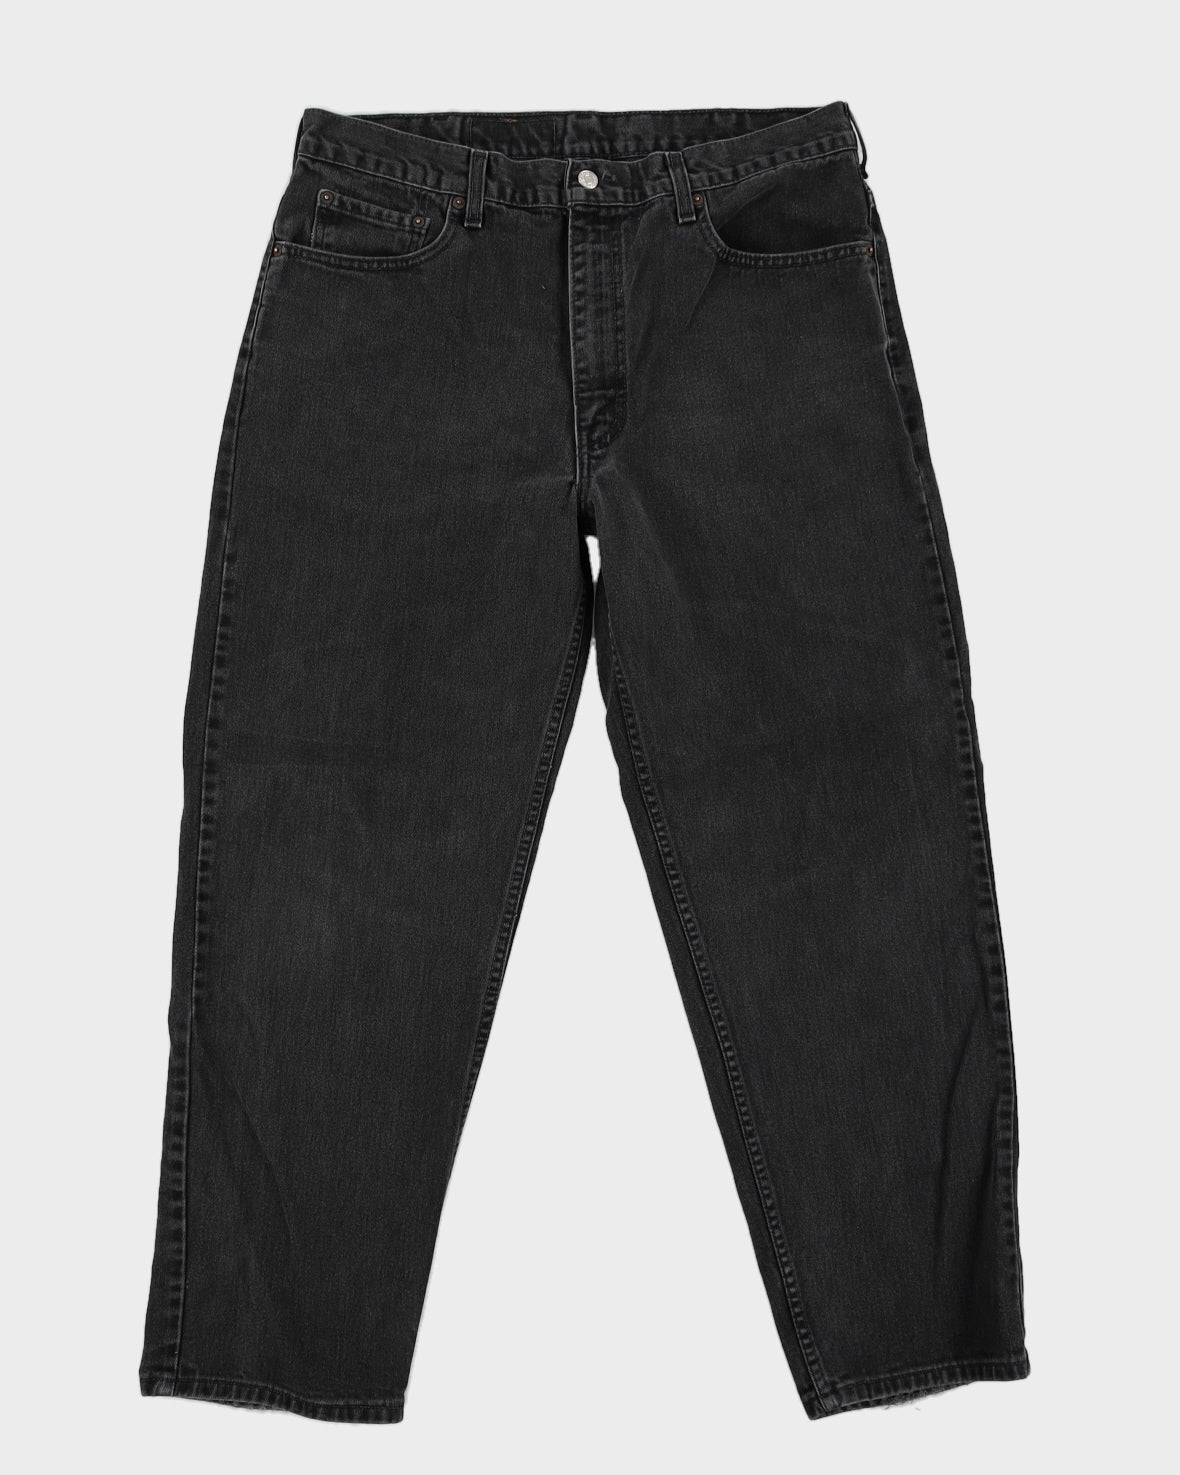 Vintage 80s Levi's Faded Black Jeans - W38 L30